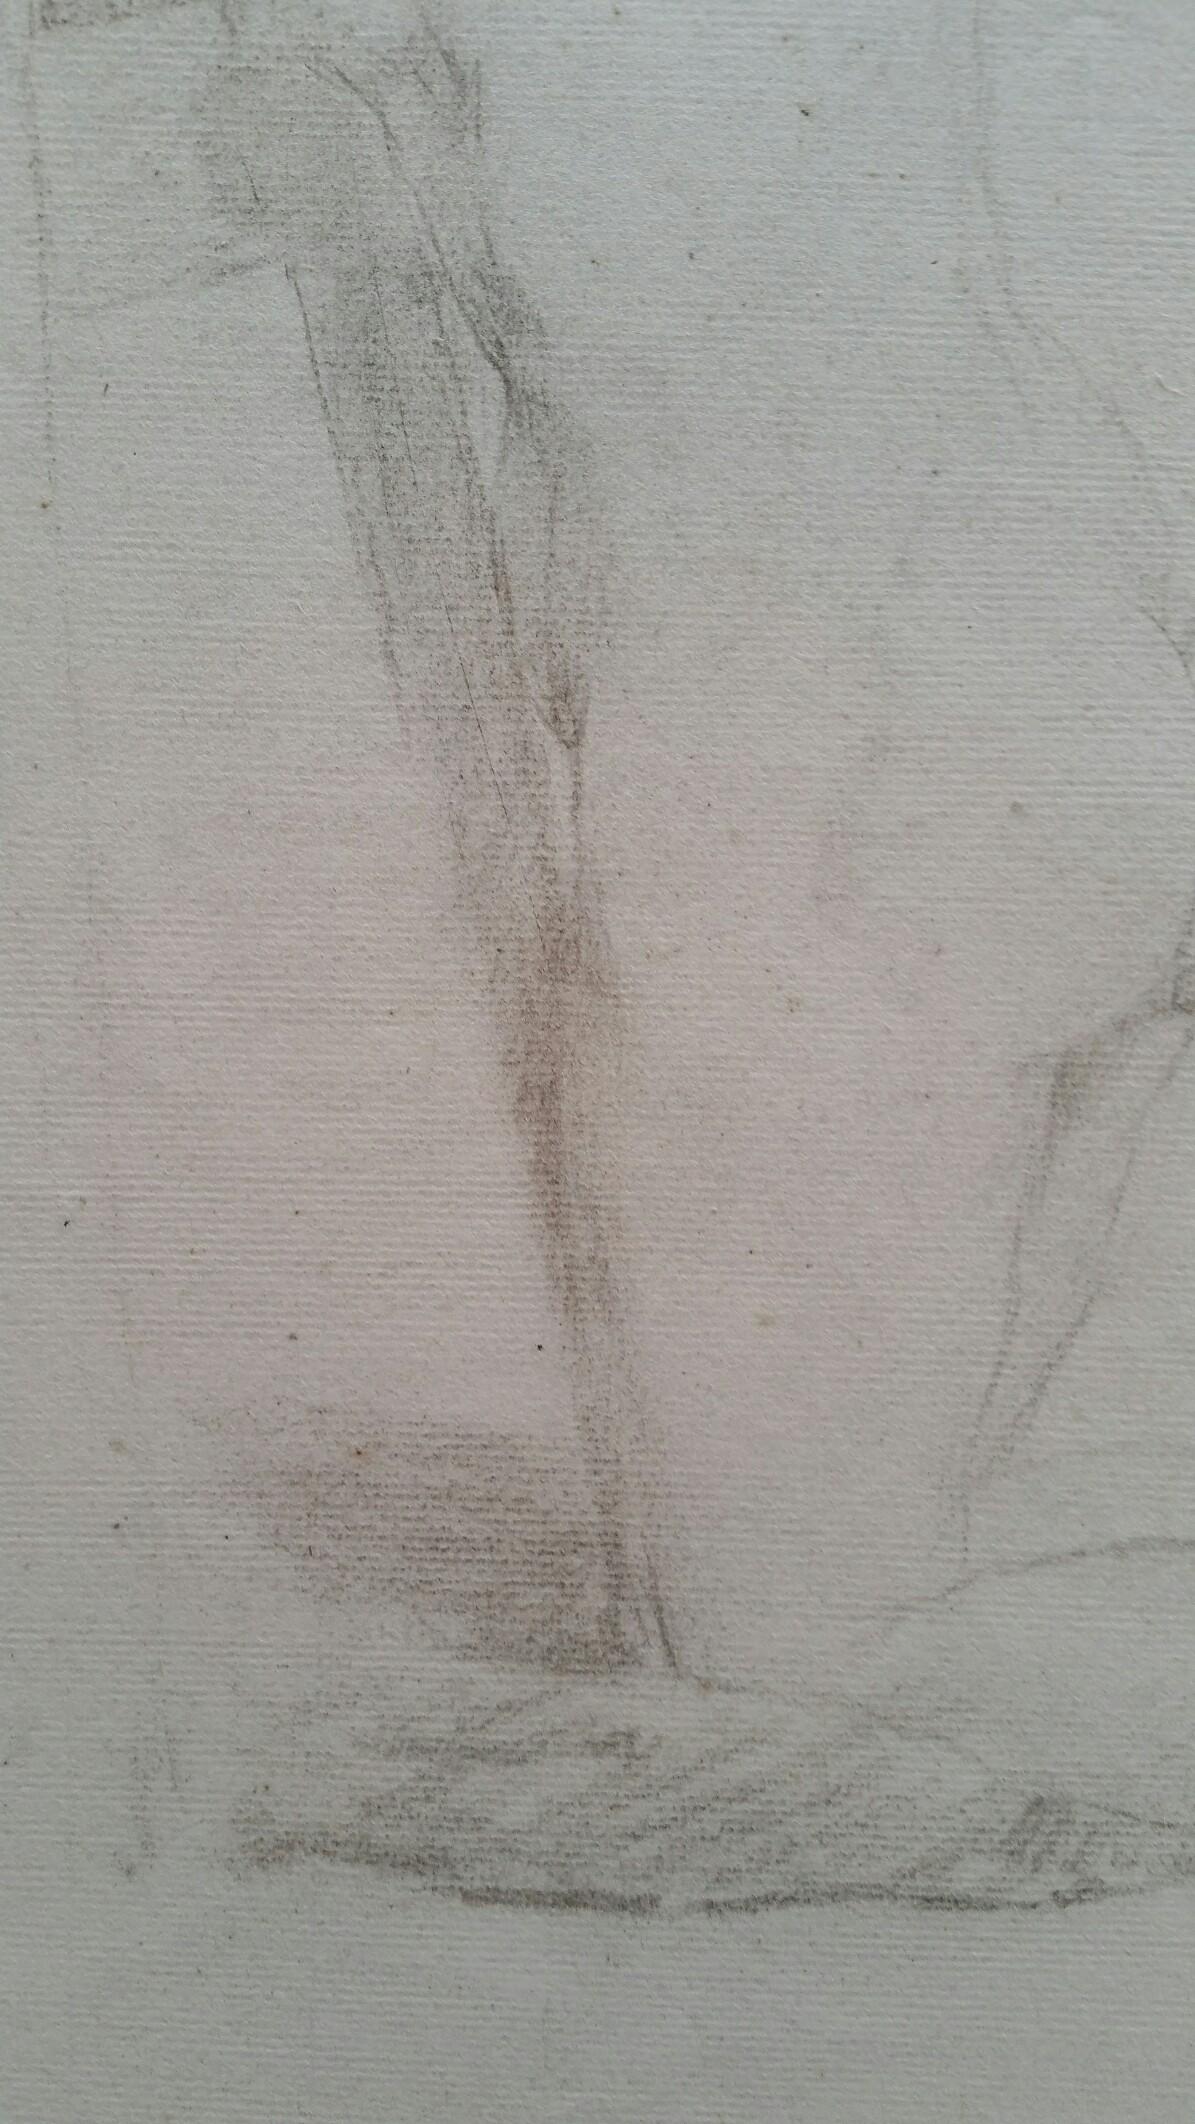 English Graphite Portrait Sketch of Female Nude, Kneeling For Sale 10